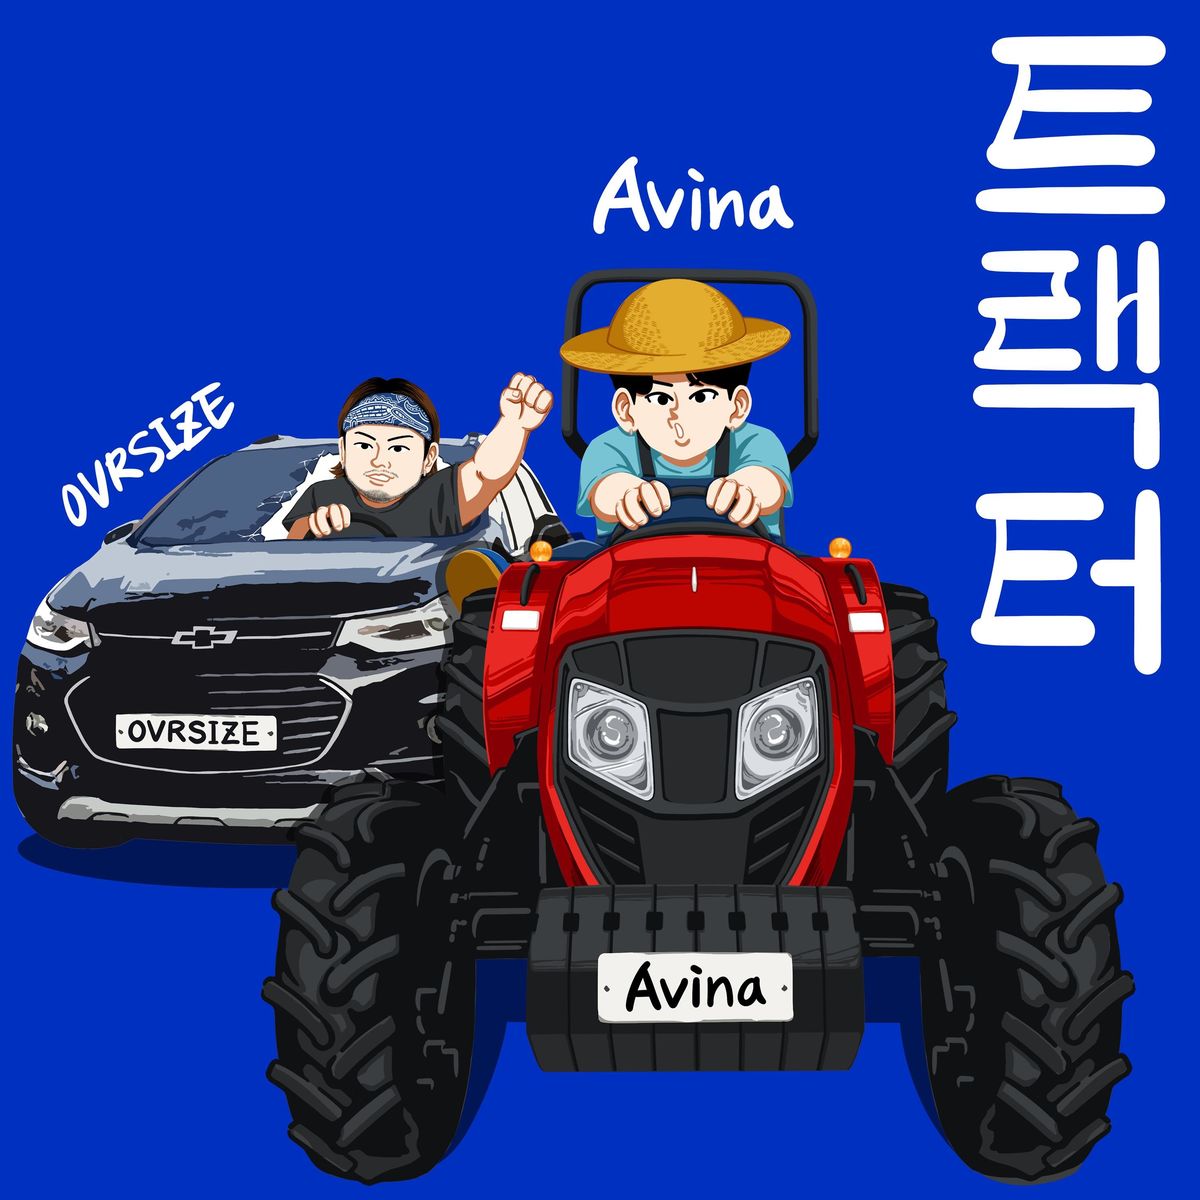 [DL MP3 + FLAC] Avina- Tractor (Feat. OVRSIZE) - Single - KPOPJJANG